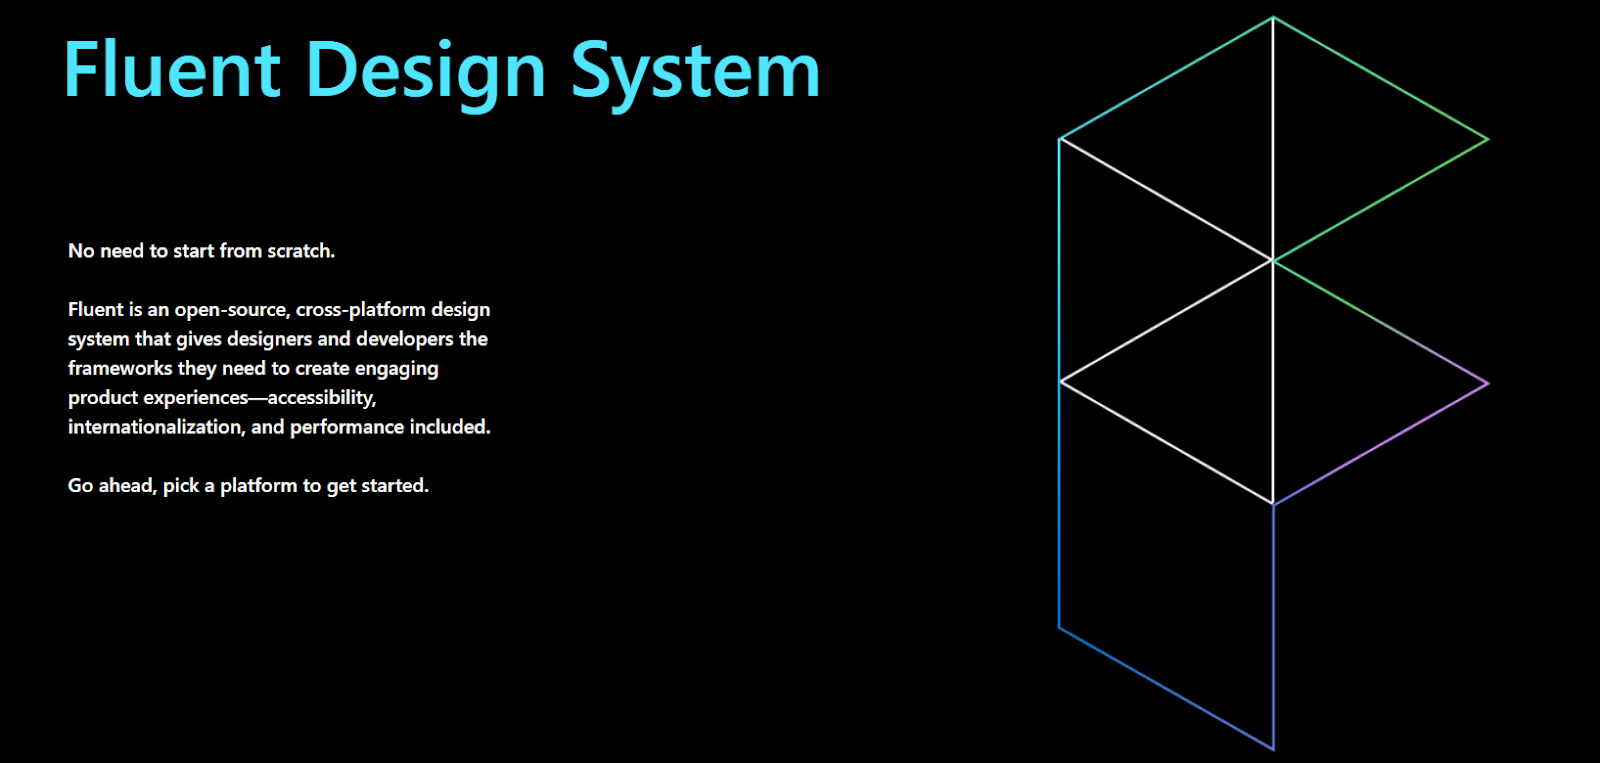 microsoft fluent design system